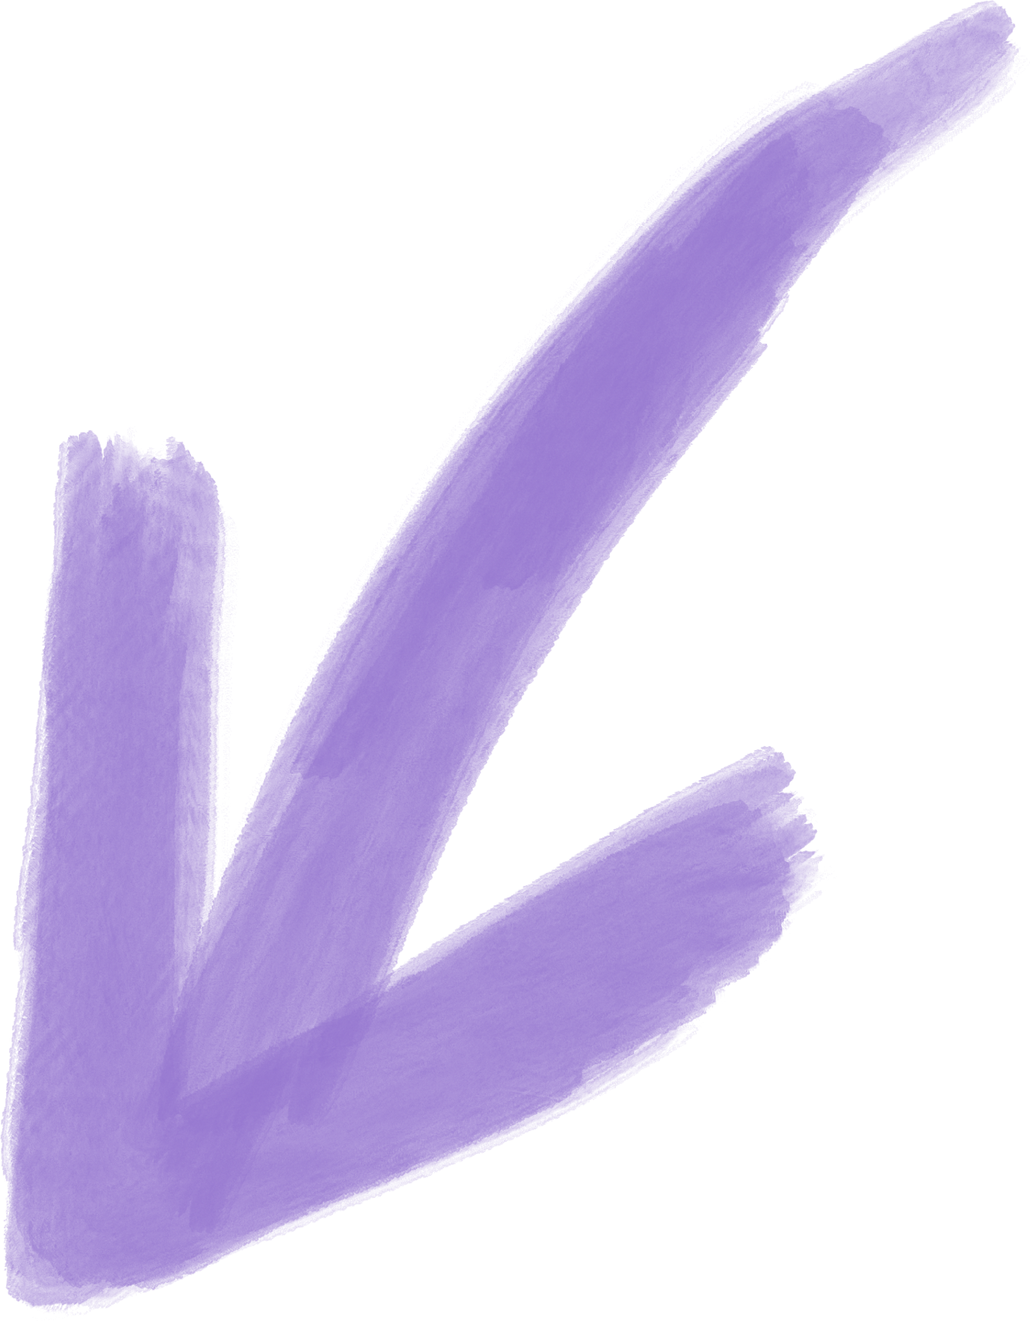 Purple Watercolor Arrow Illustration